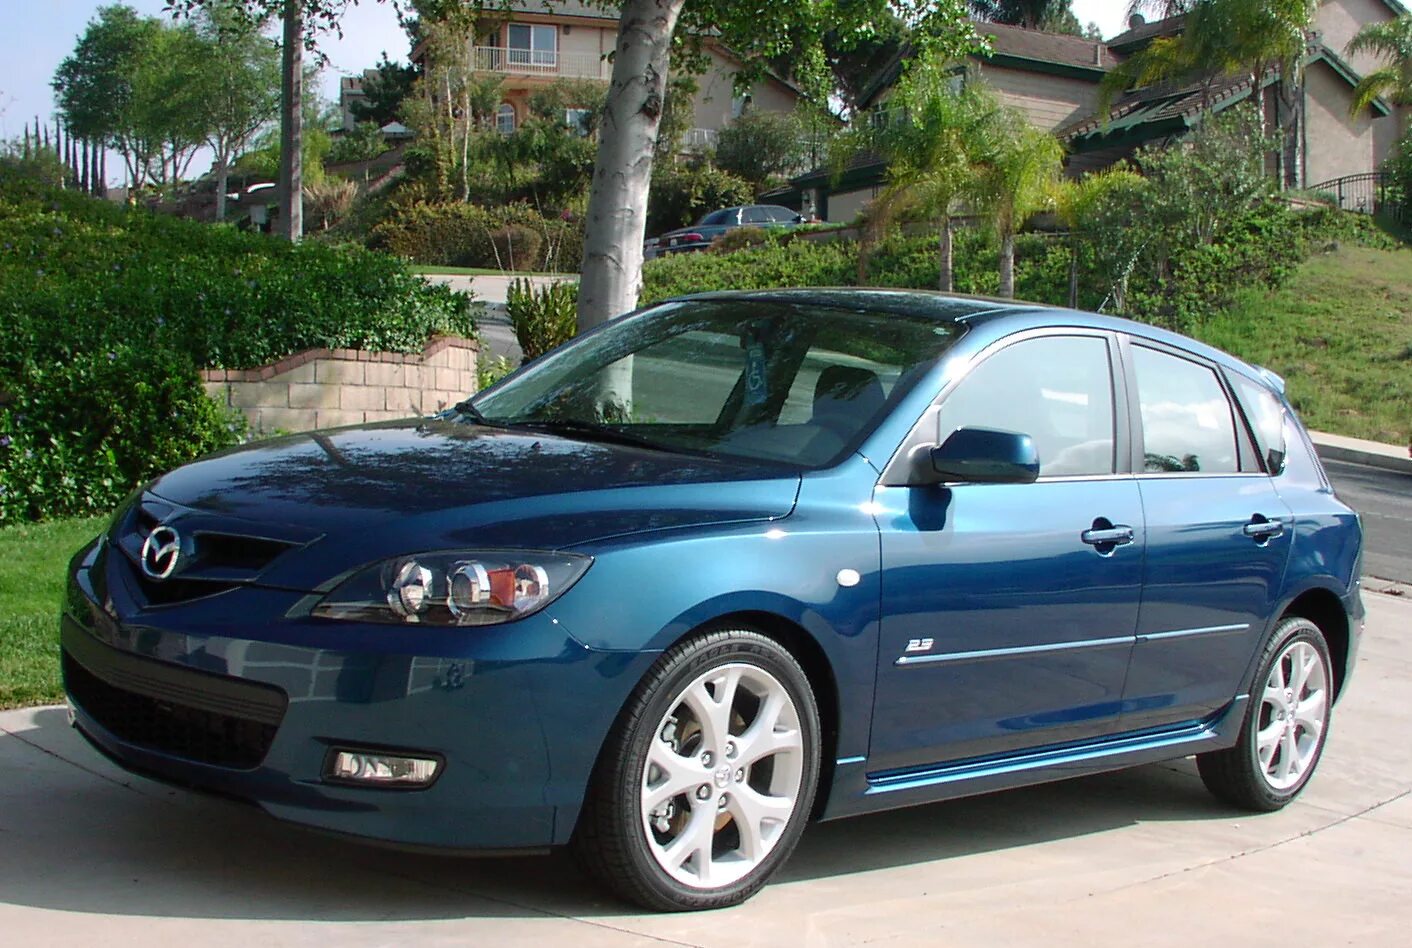 Mazda 3 2007. Mazda 3 Hatchback 2007. Мазда 3 2007 хэтчбек 1.6. Мазда 3 седан 2007. Мазда 3 своими руками